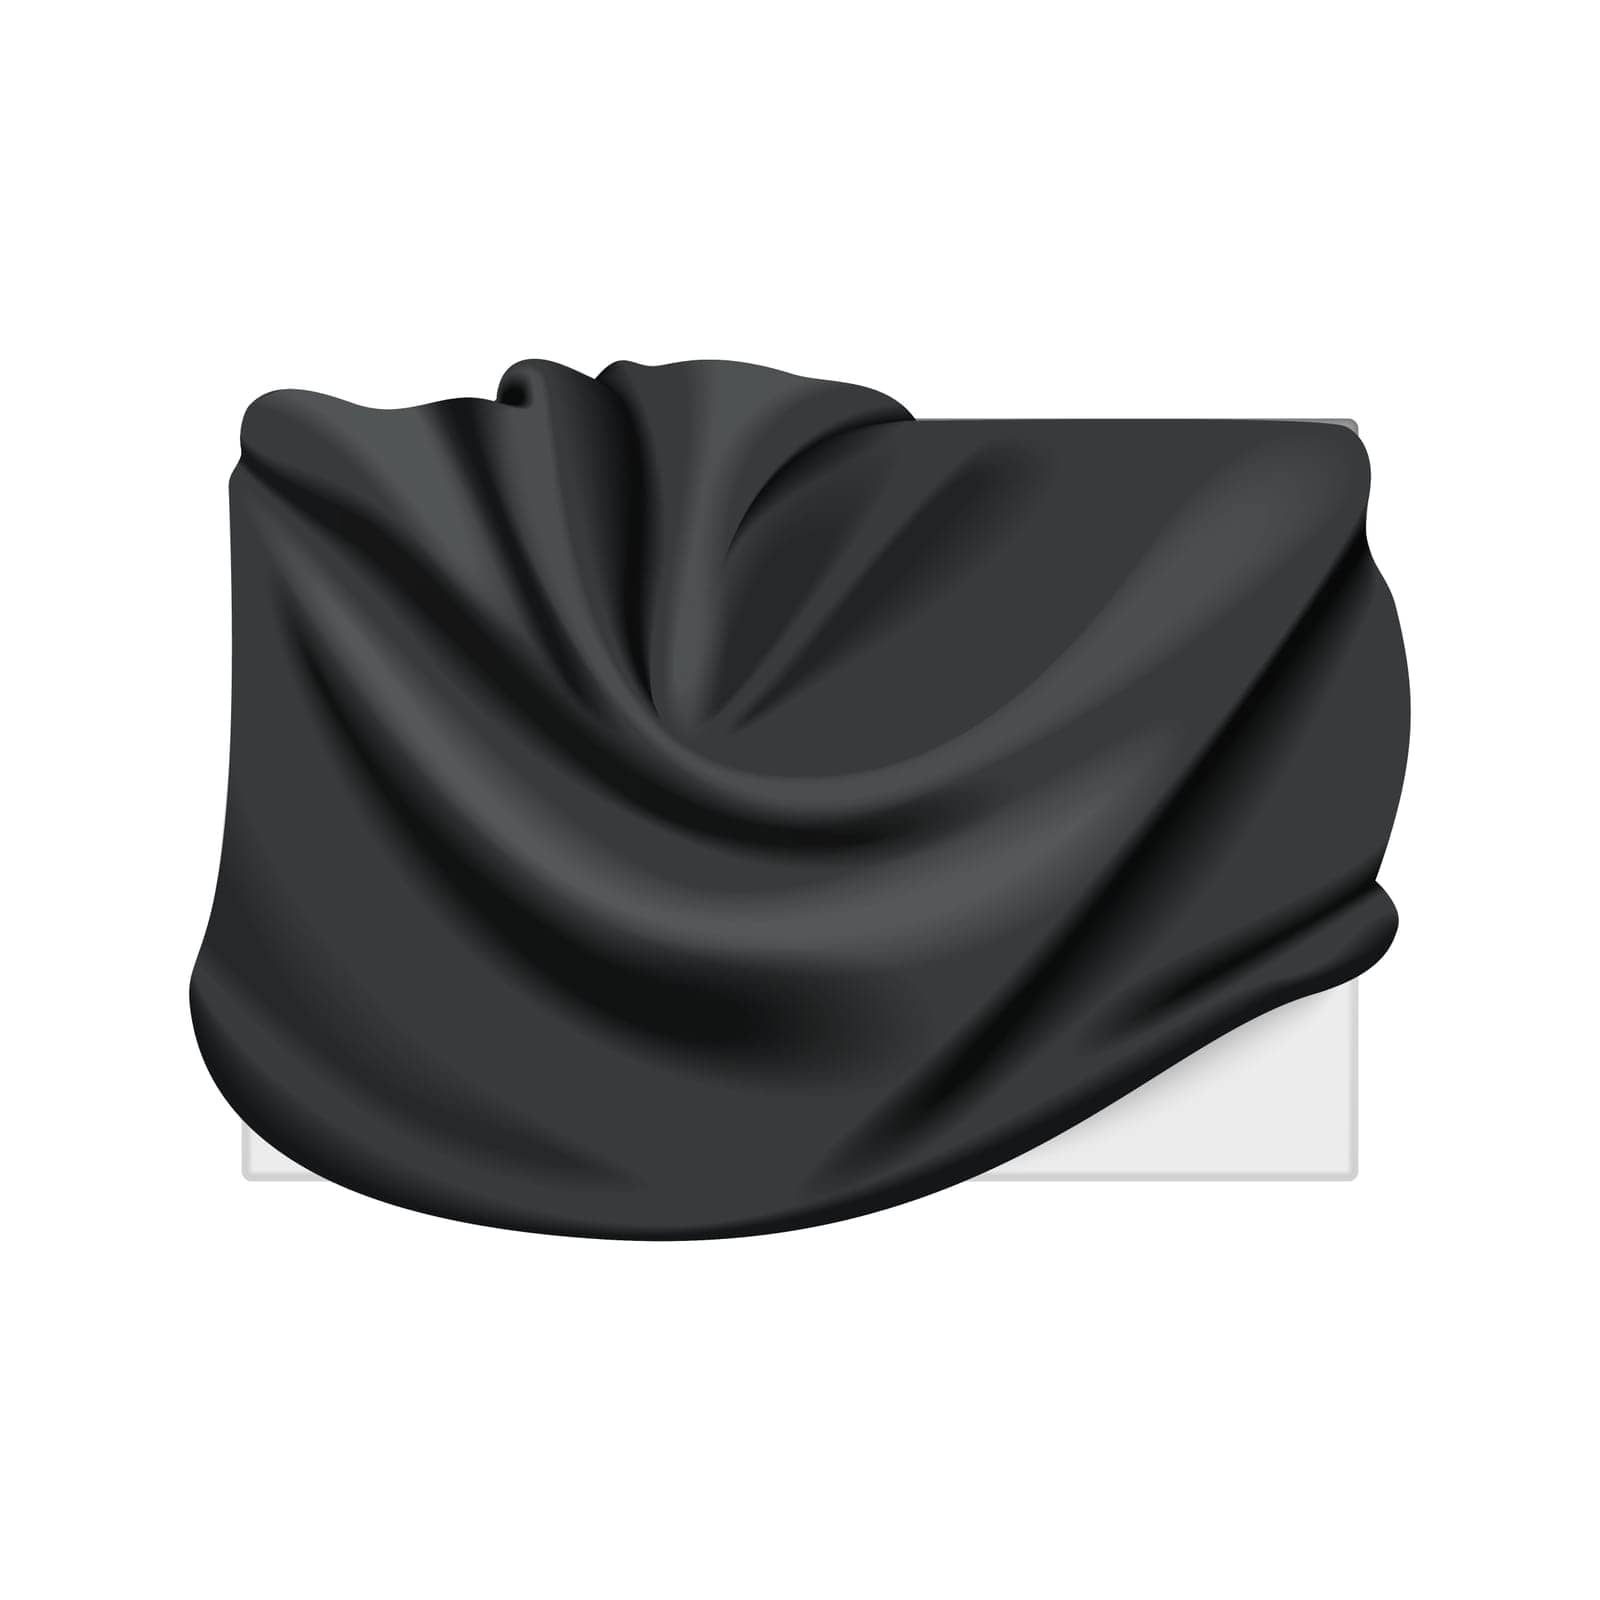 Box hidden with black cloth cover, silk fabric drapery on white board vector illustration